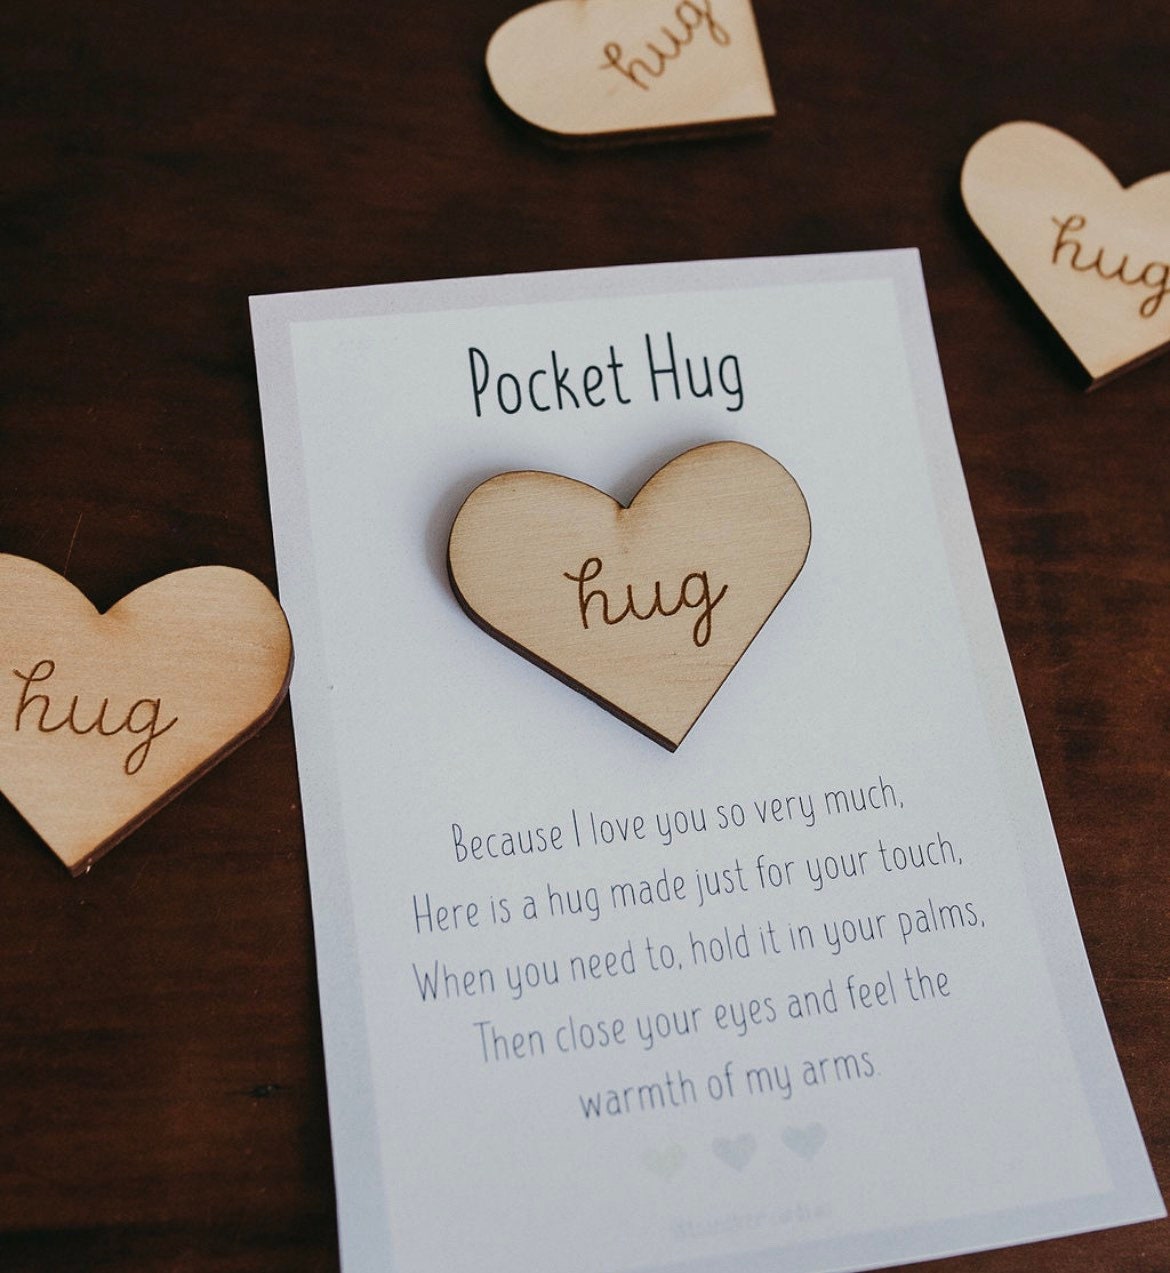 Pocket Hug – toandfromcards